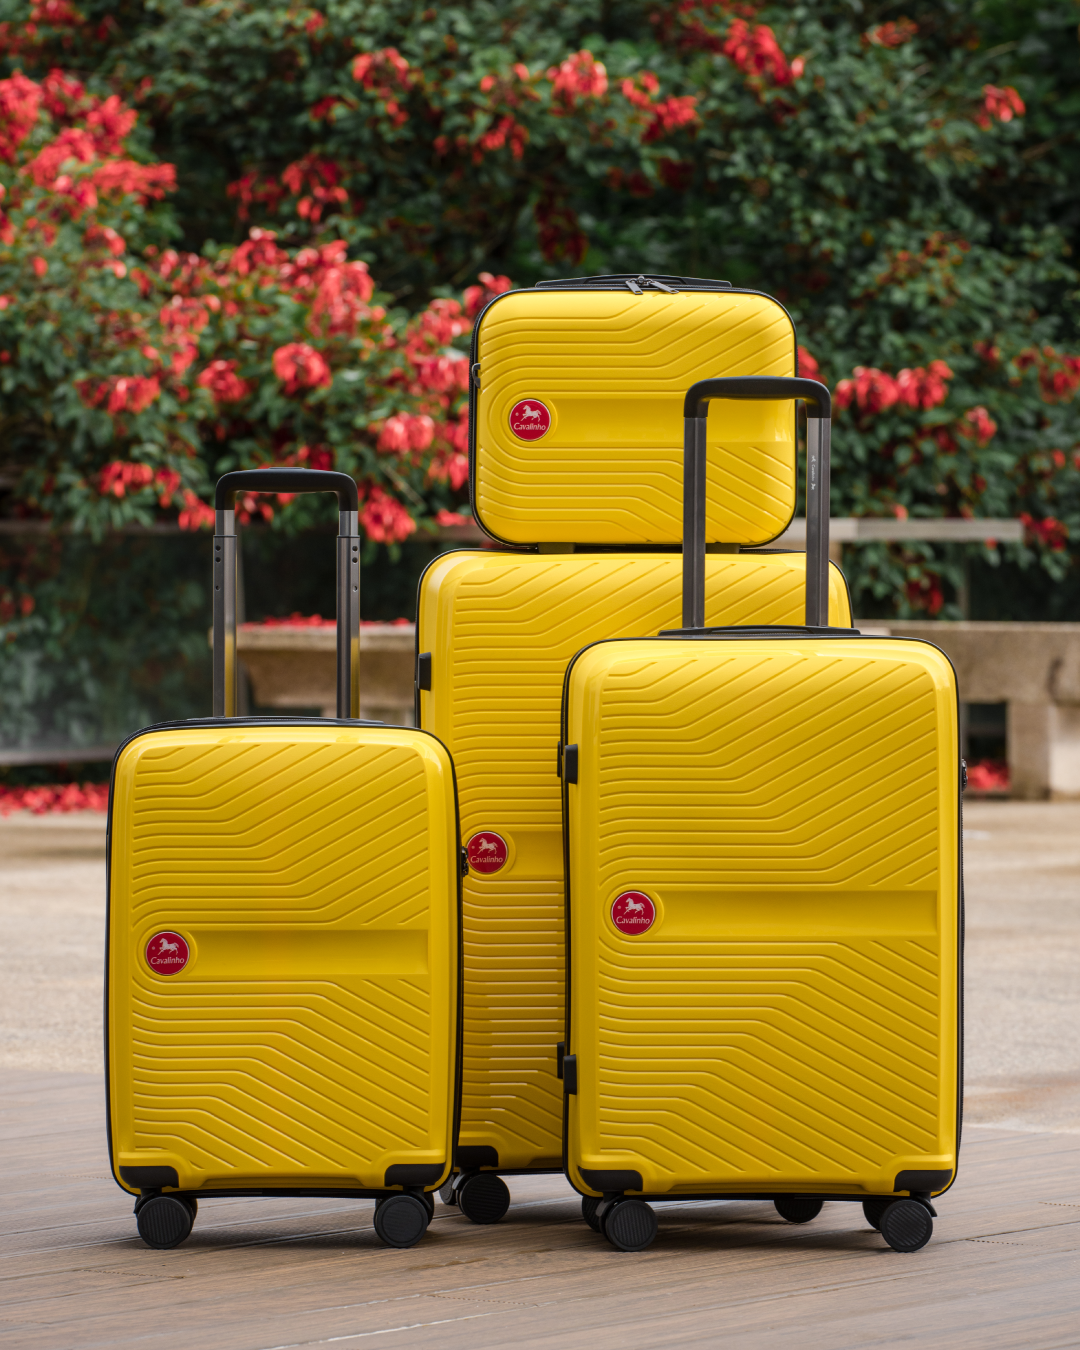 Cavalinho Canada & USA 4 Piece Set of Colorful Hardside Luggage (15", 19", 24", 28") - Yellow - 68020004.08_20d98ac6-2a1a-41aa-b1e9-6ed900283138